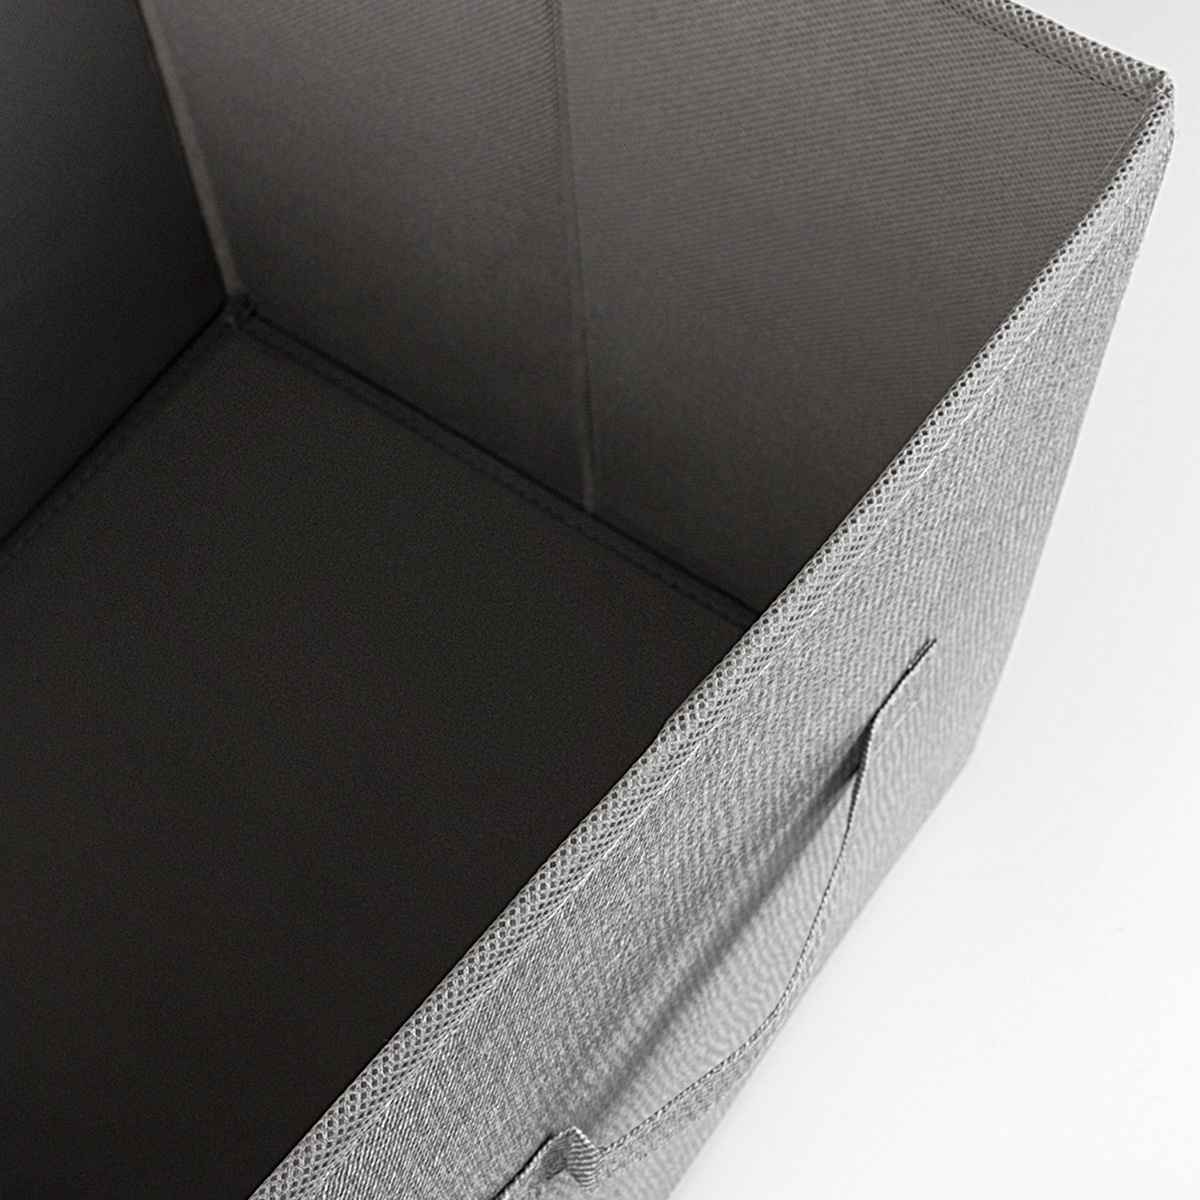 Ящик для хранения MVM тканевый серый 280x280x280 TH-08 GRAY